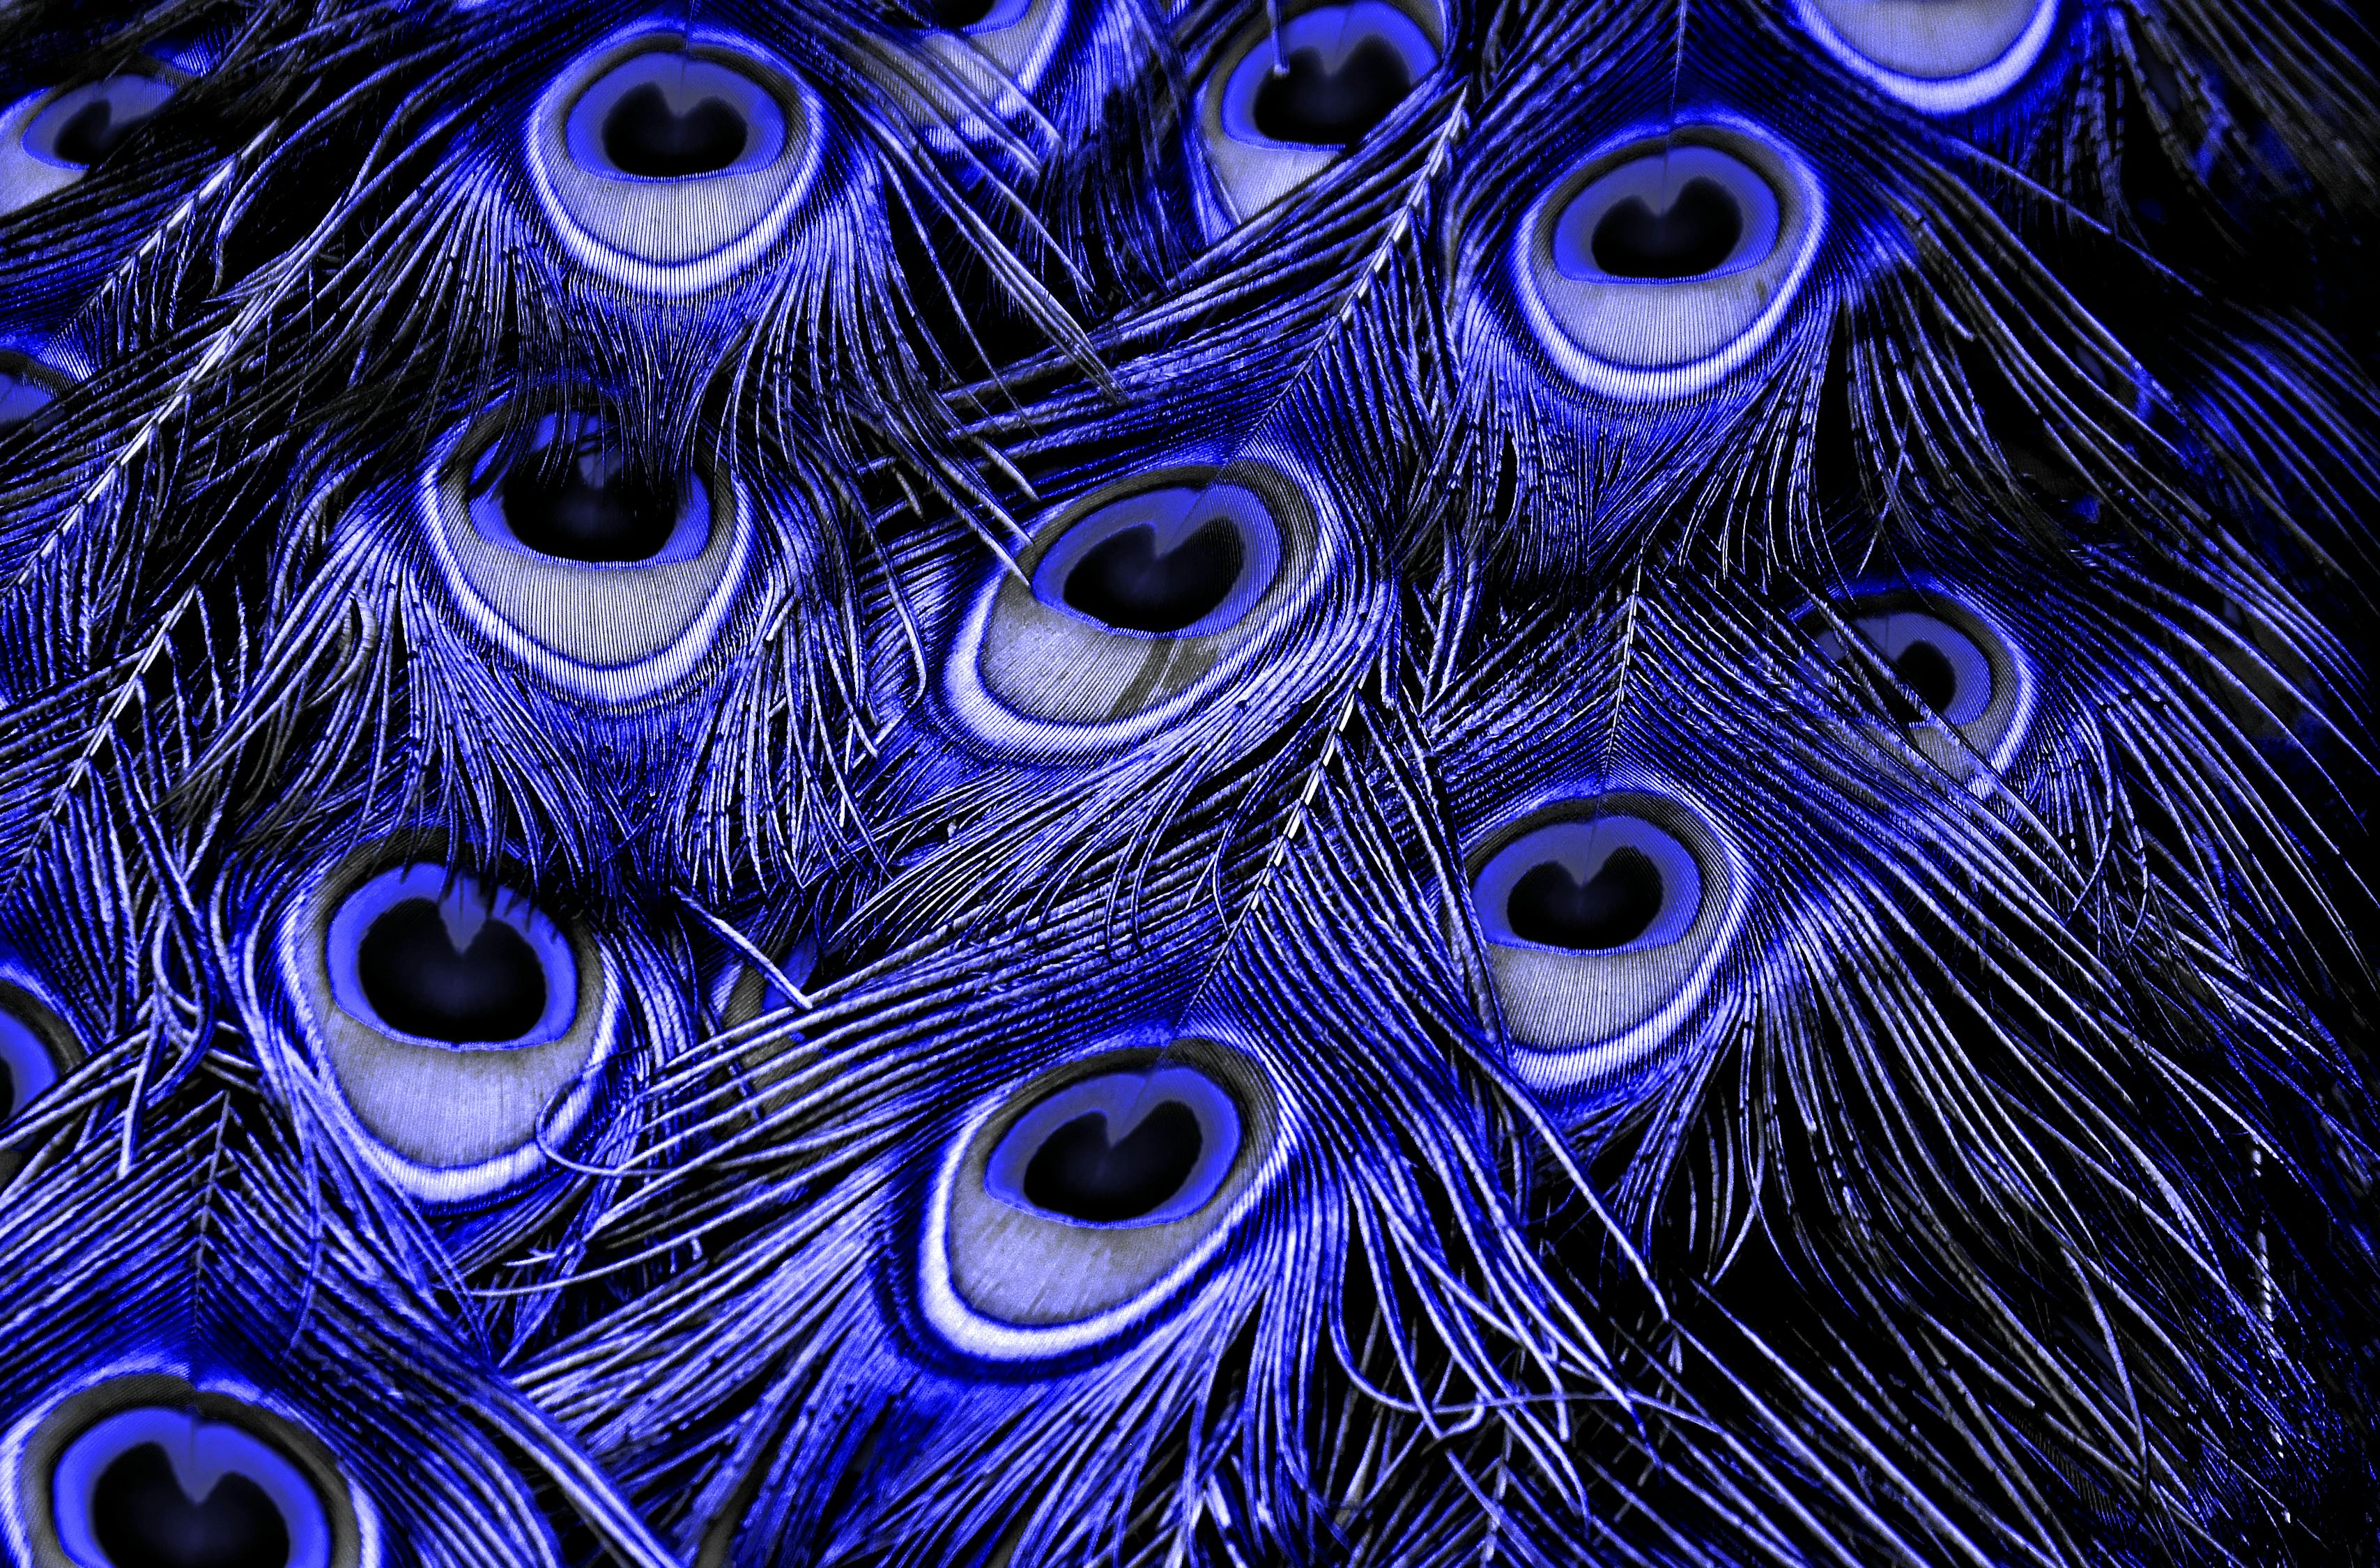 Purple Peacock Feather · Free Stock Photo